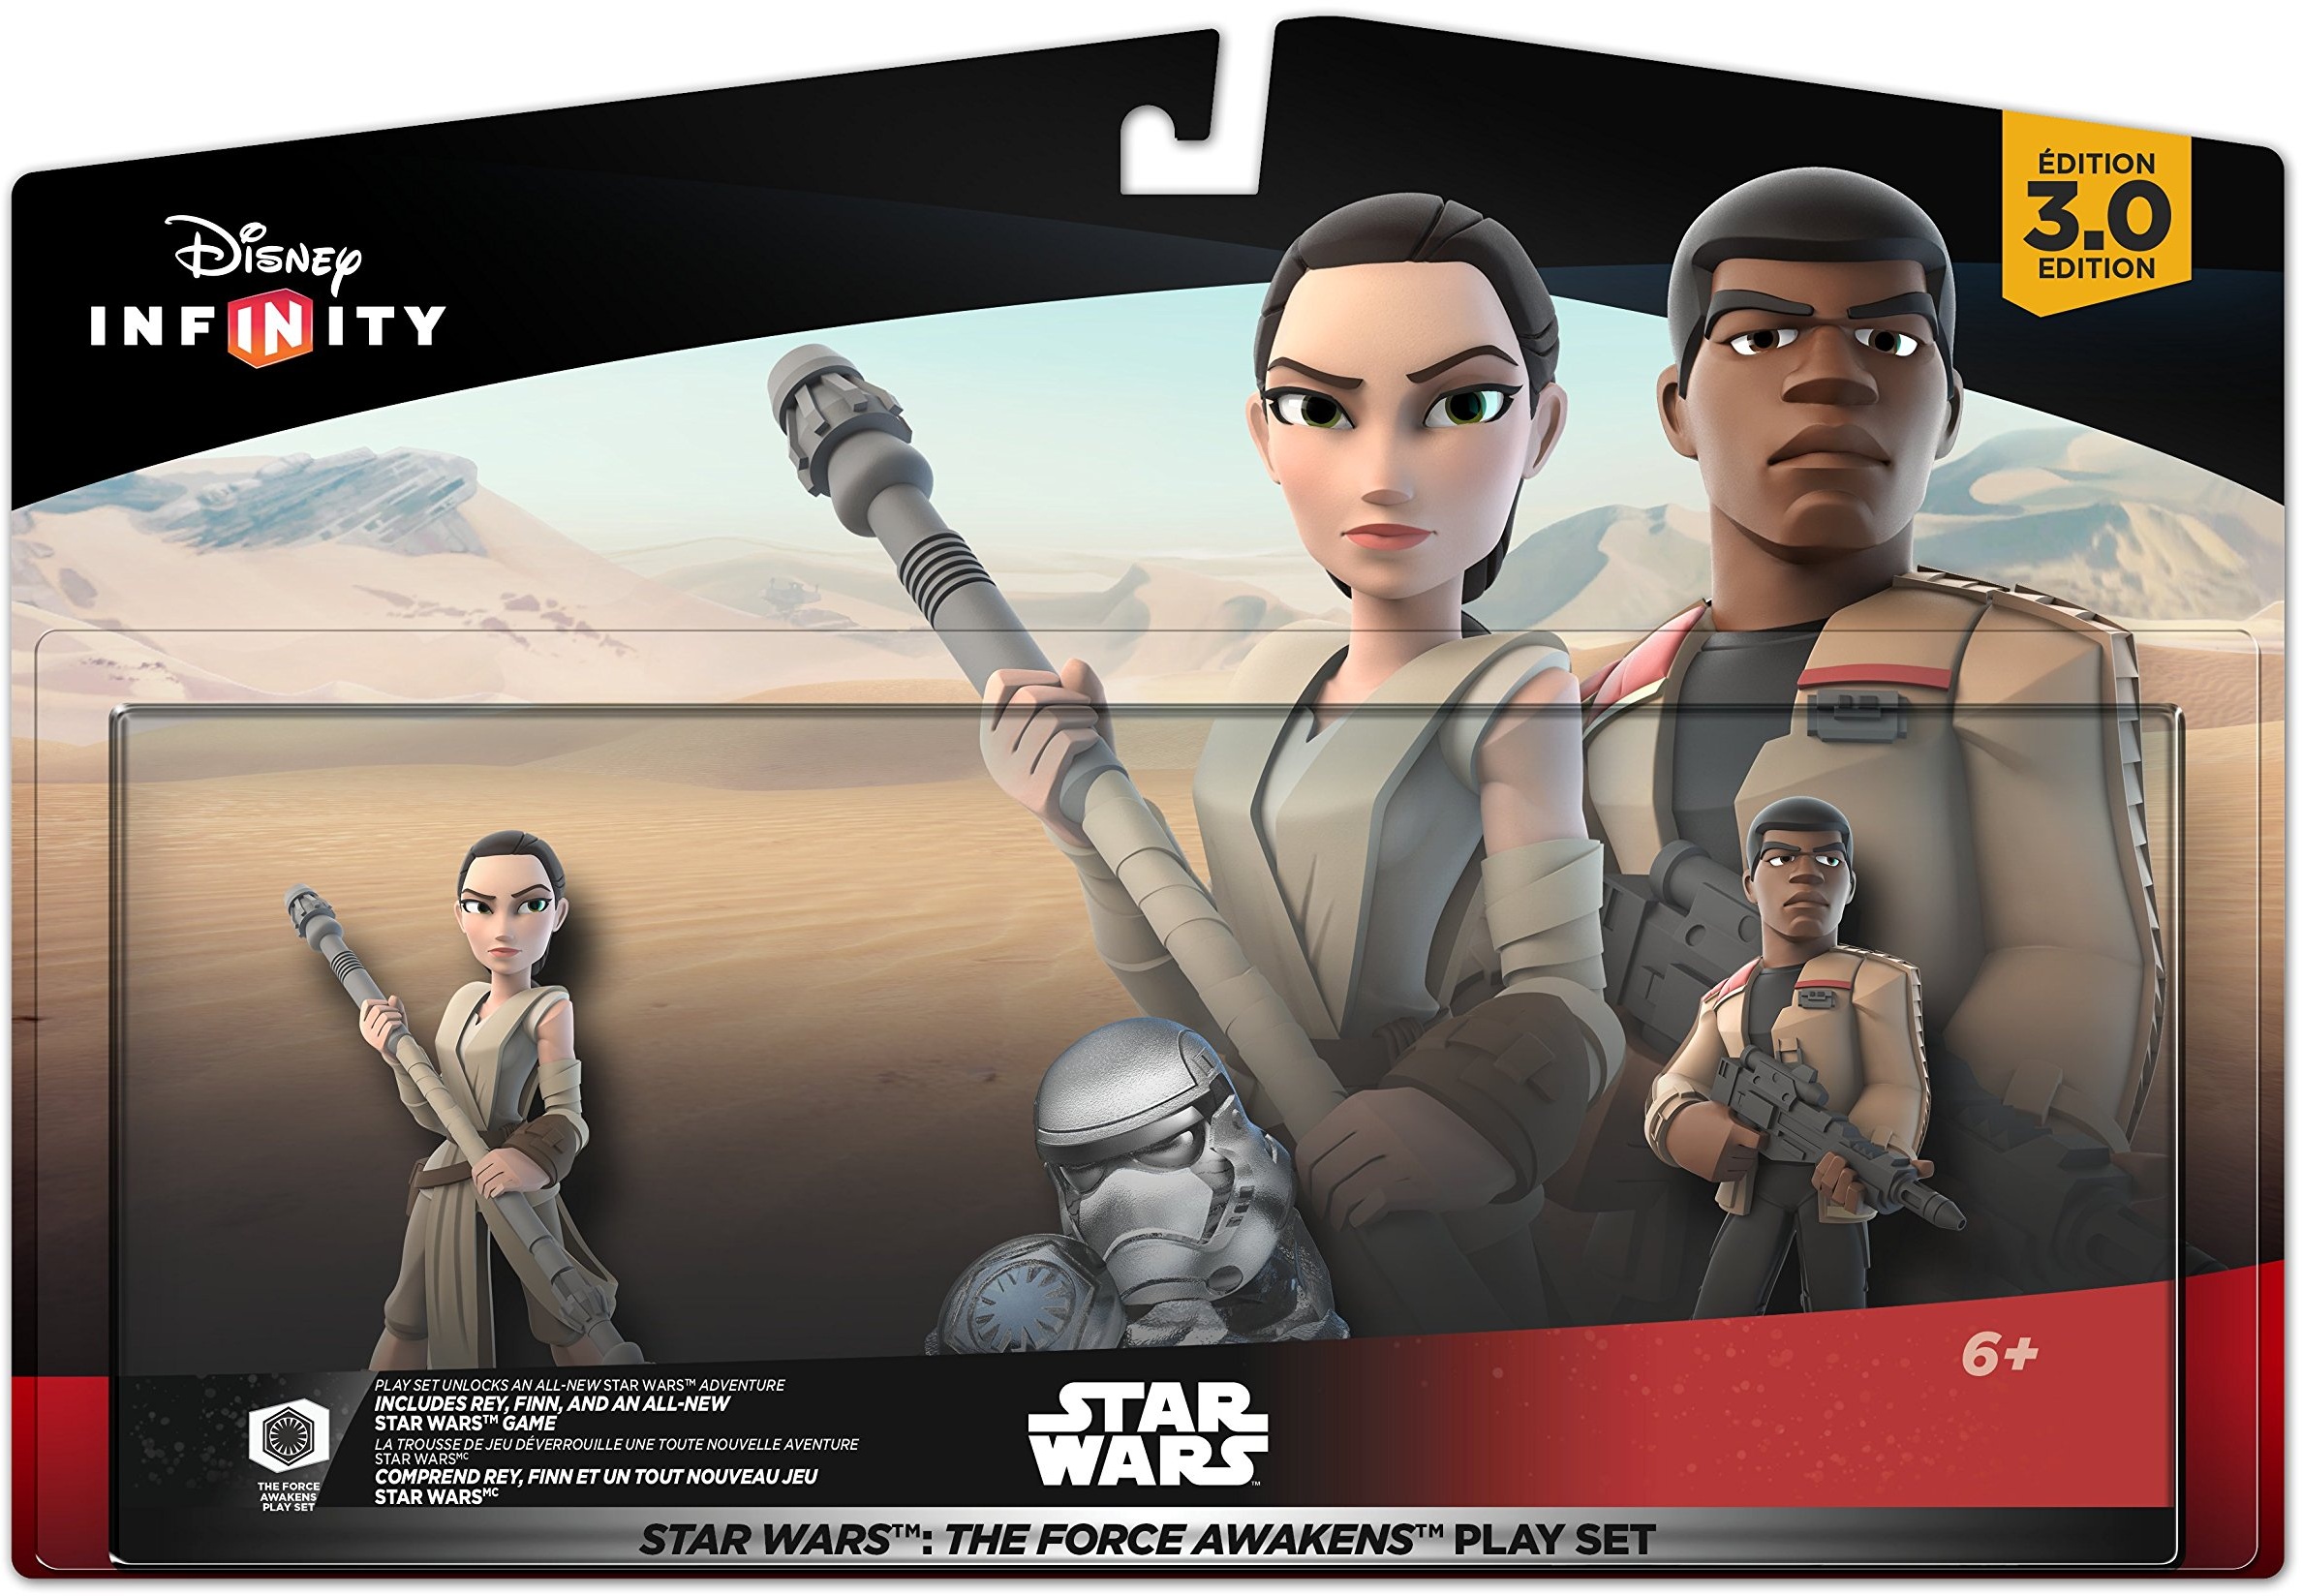 Disney Infinity 3.0 Edition: Star Wars The Force Awakens Play Set by Disney Infinity